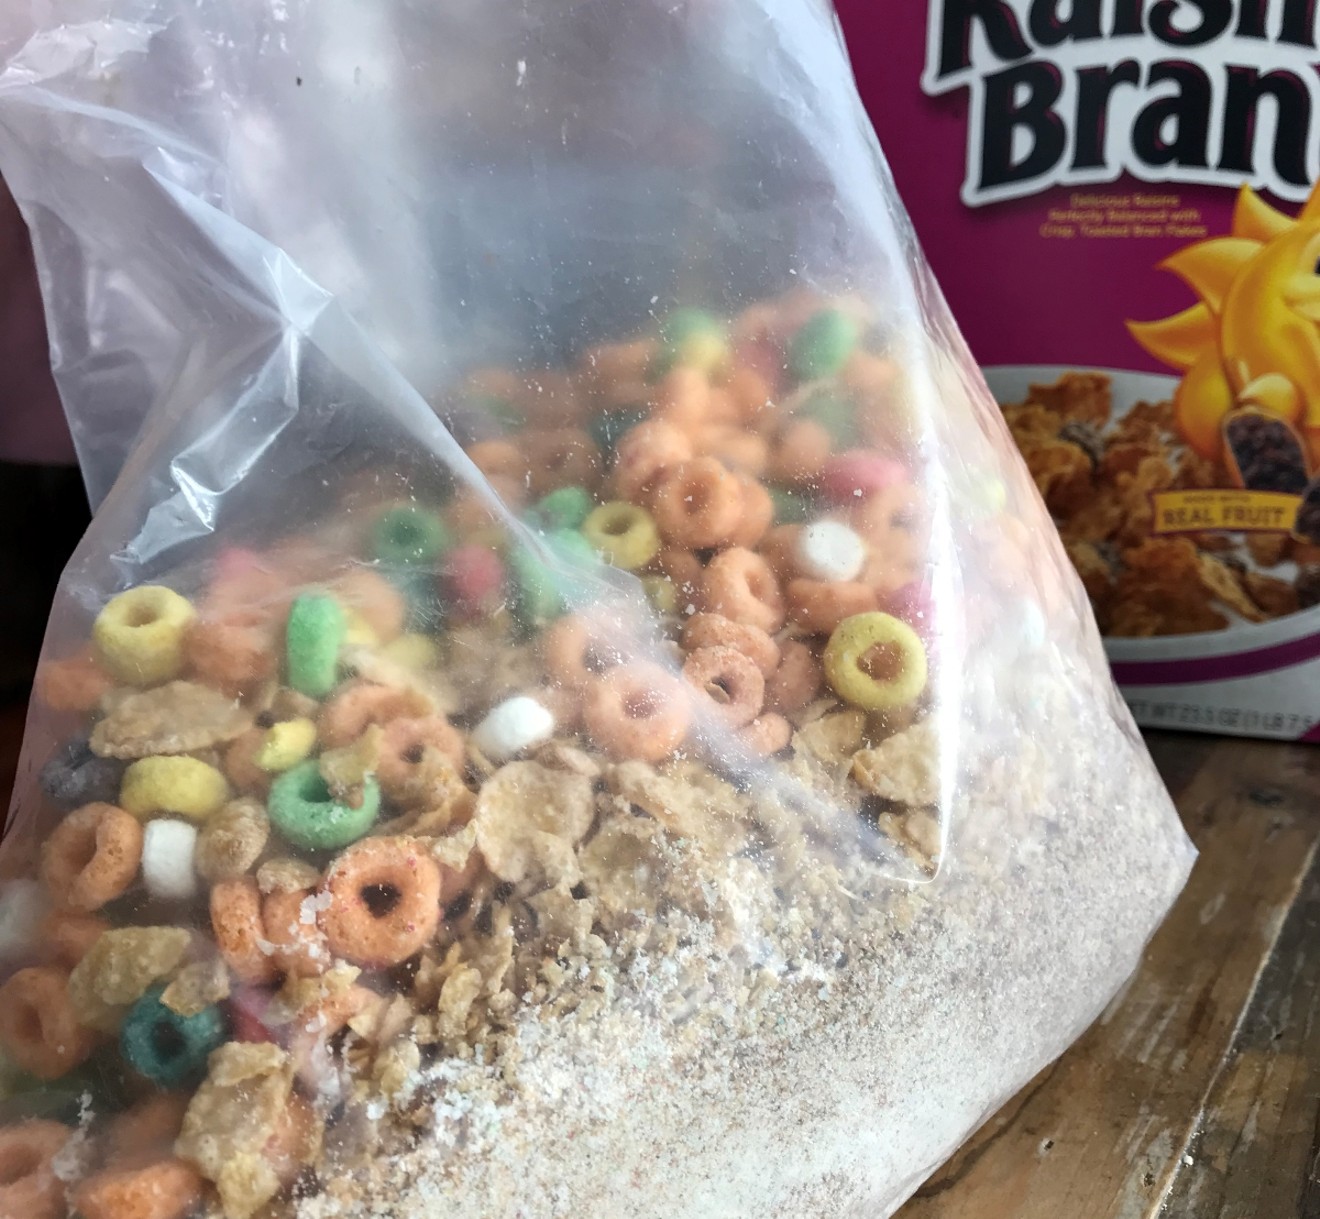 Mystery cereal mixture inside sealed Raisin Bran box.